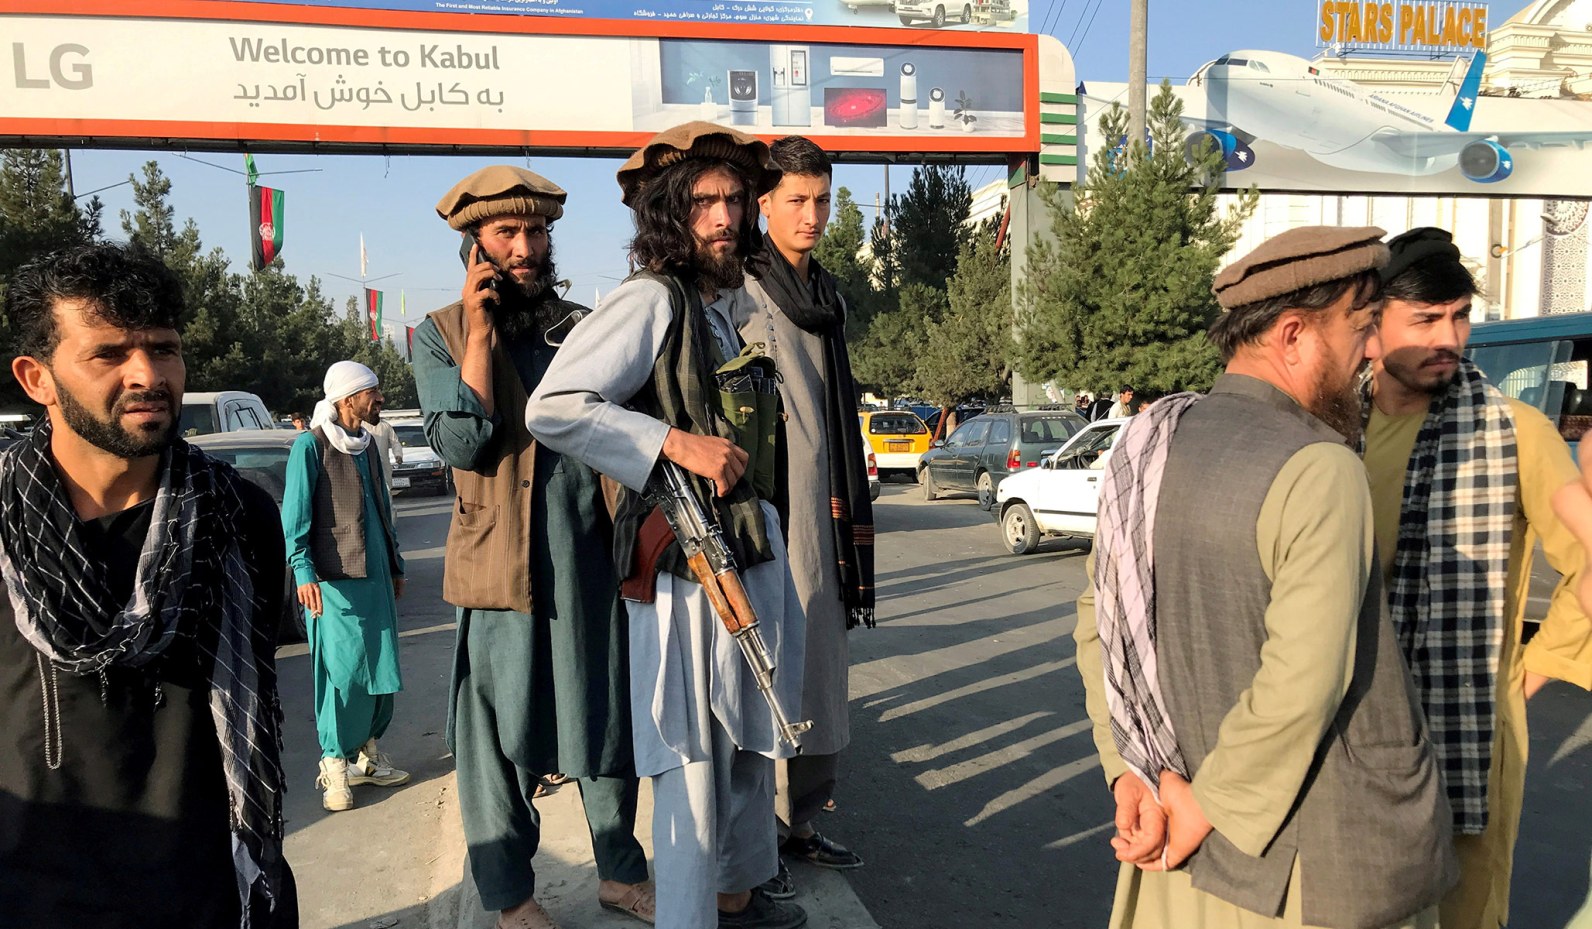 Taliban member - outside Hamid Karzai International Airport in Kabul